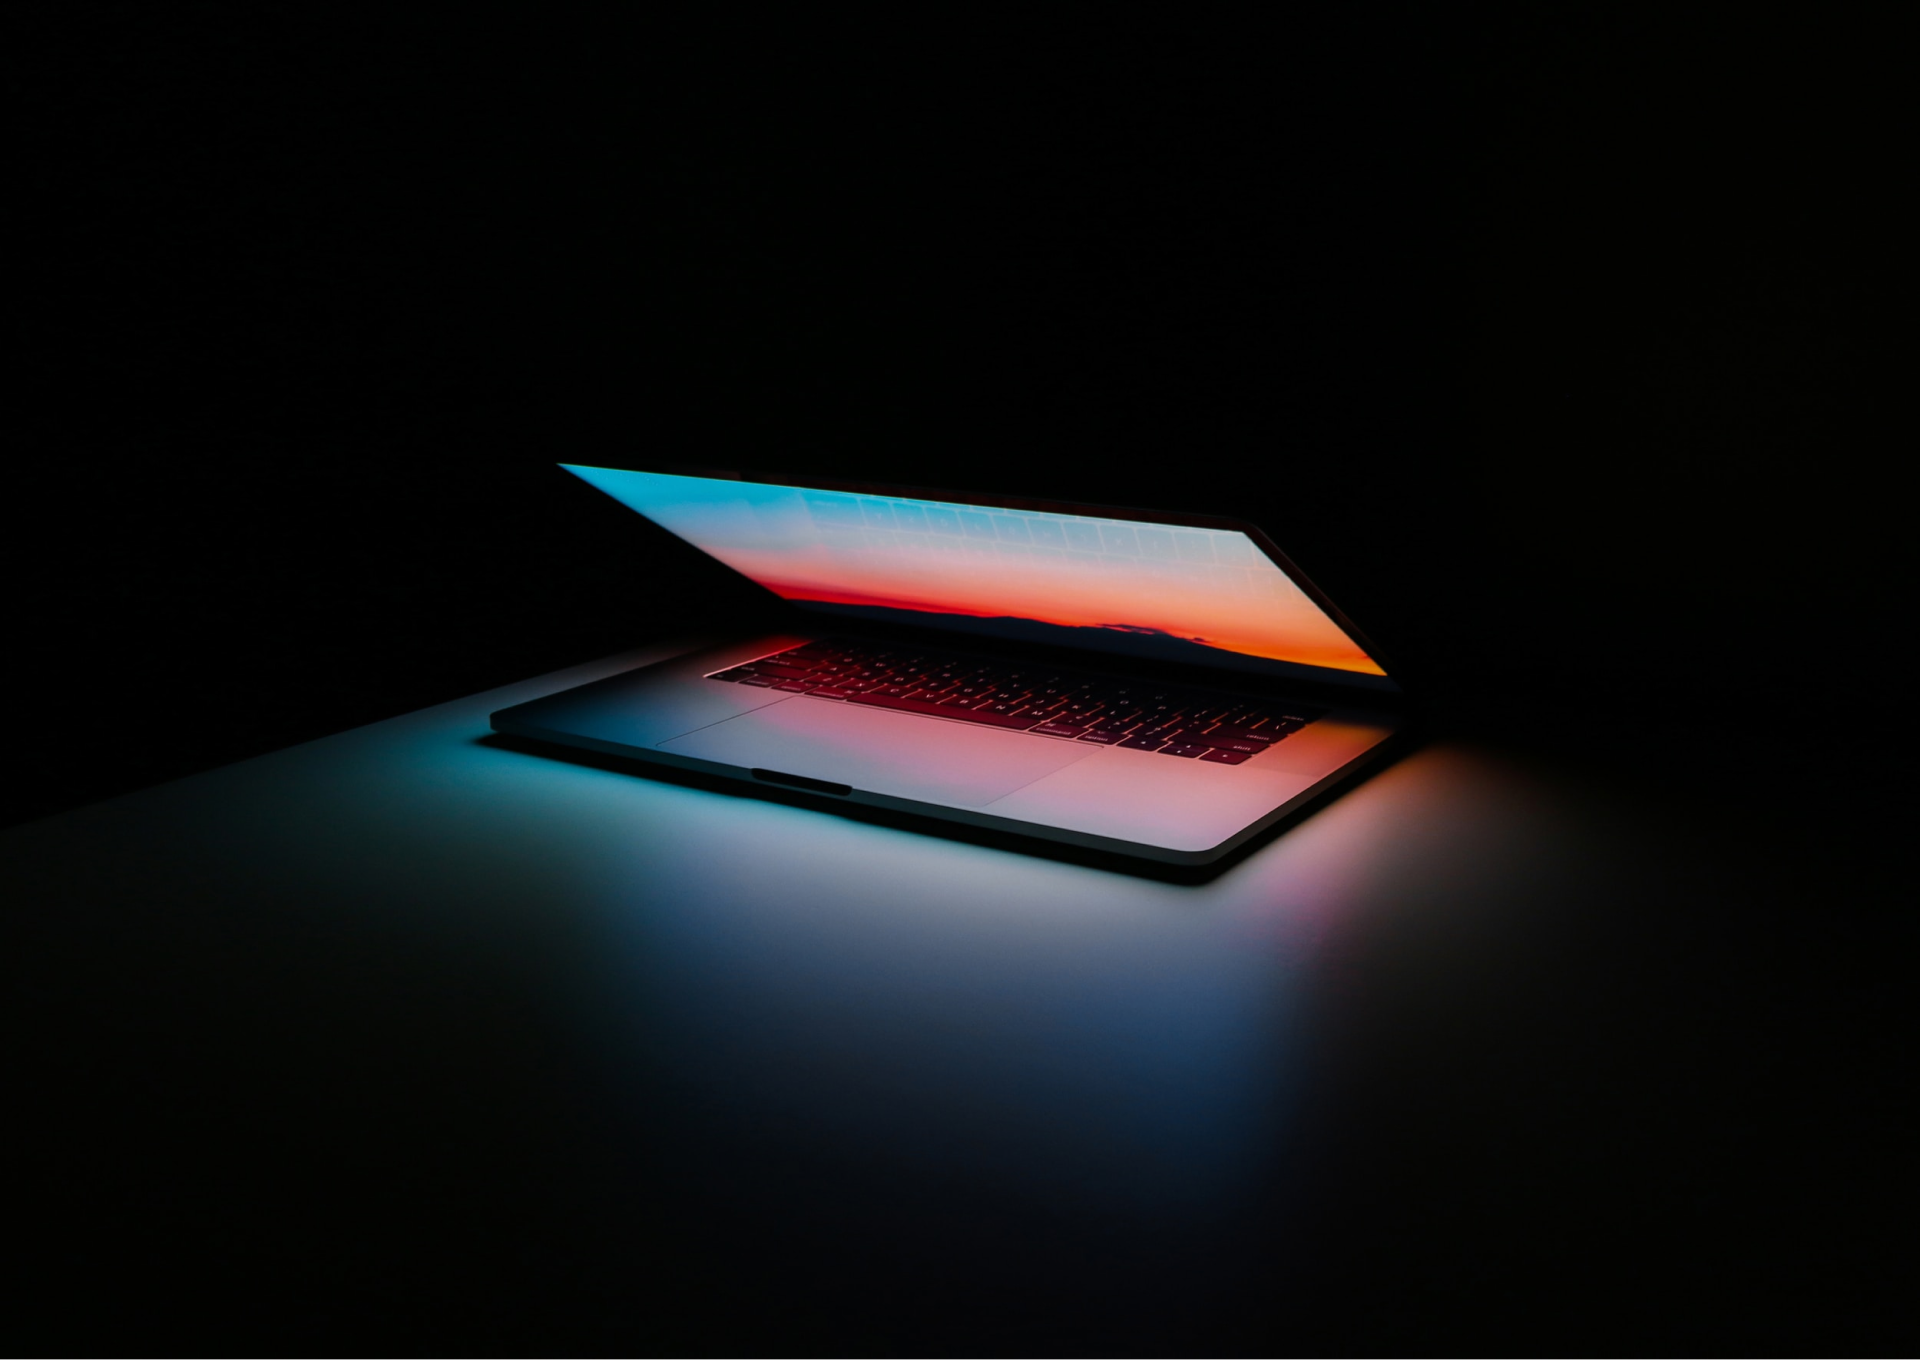 semi closed laptop in the dark reflecting its inner light